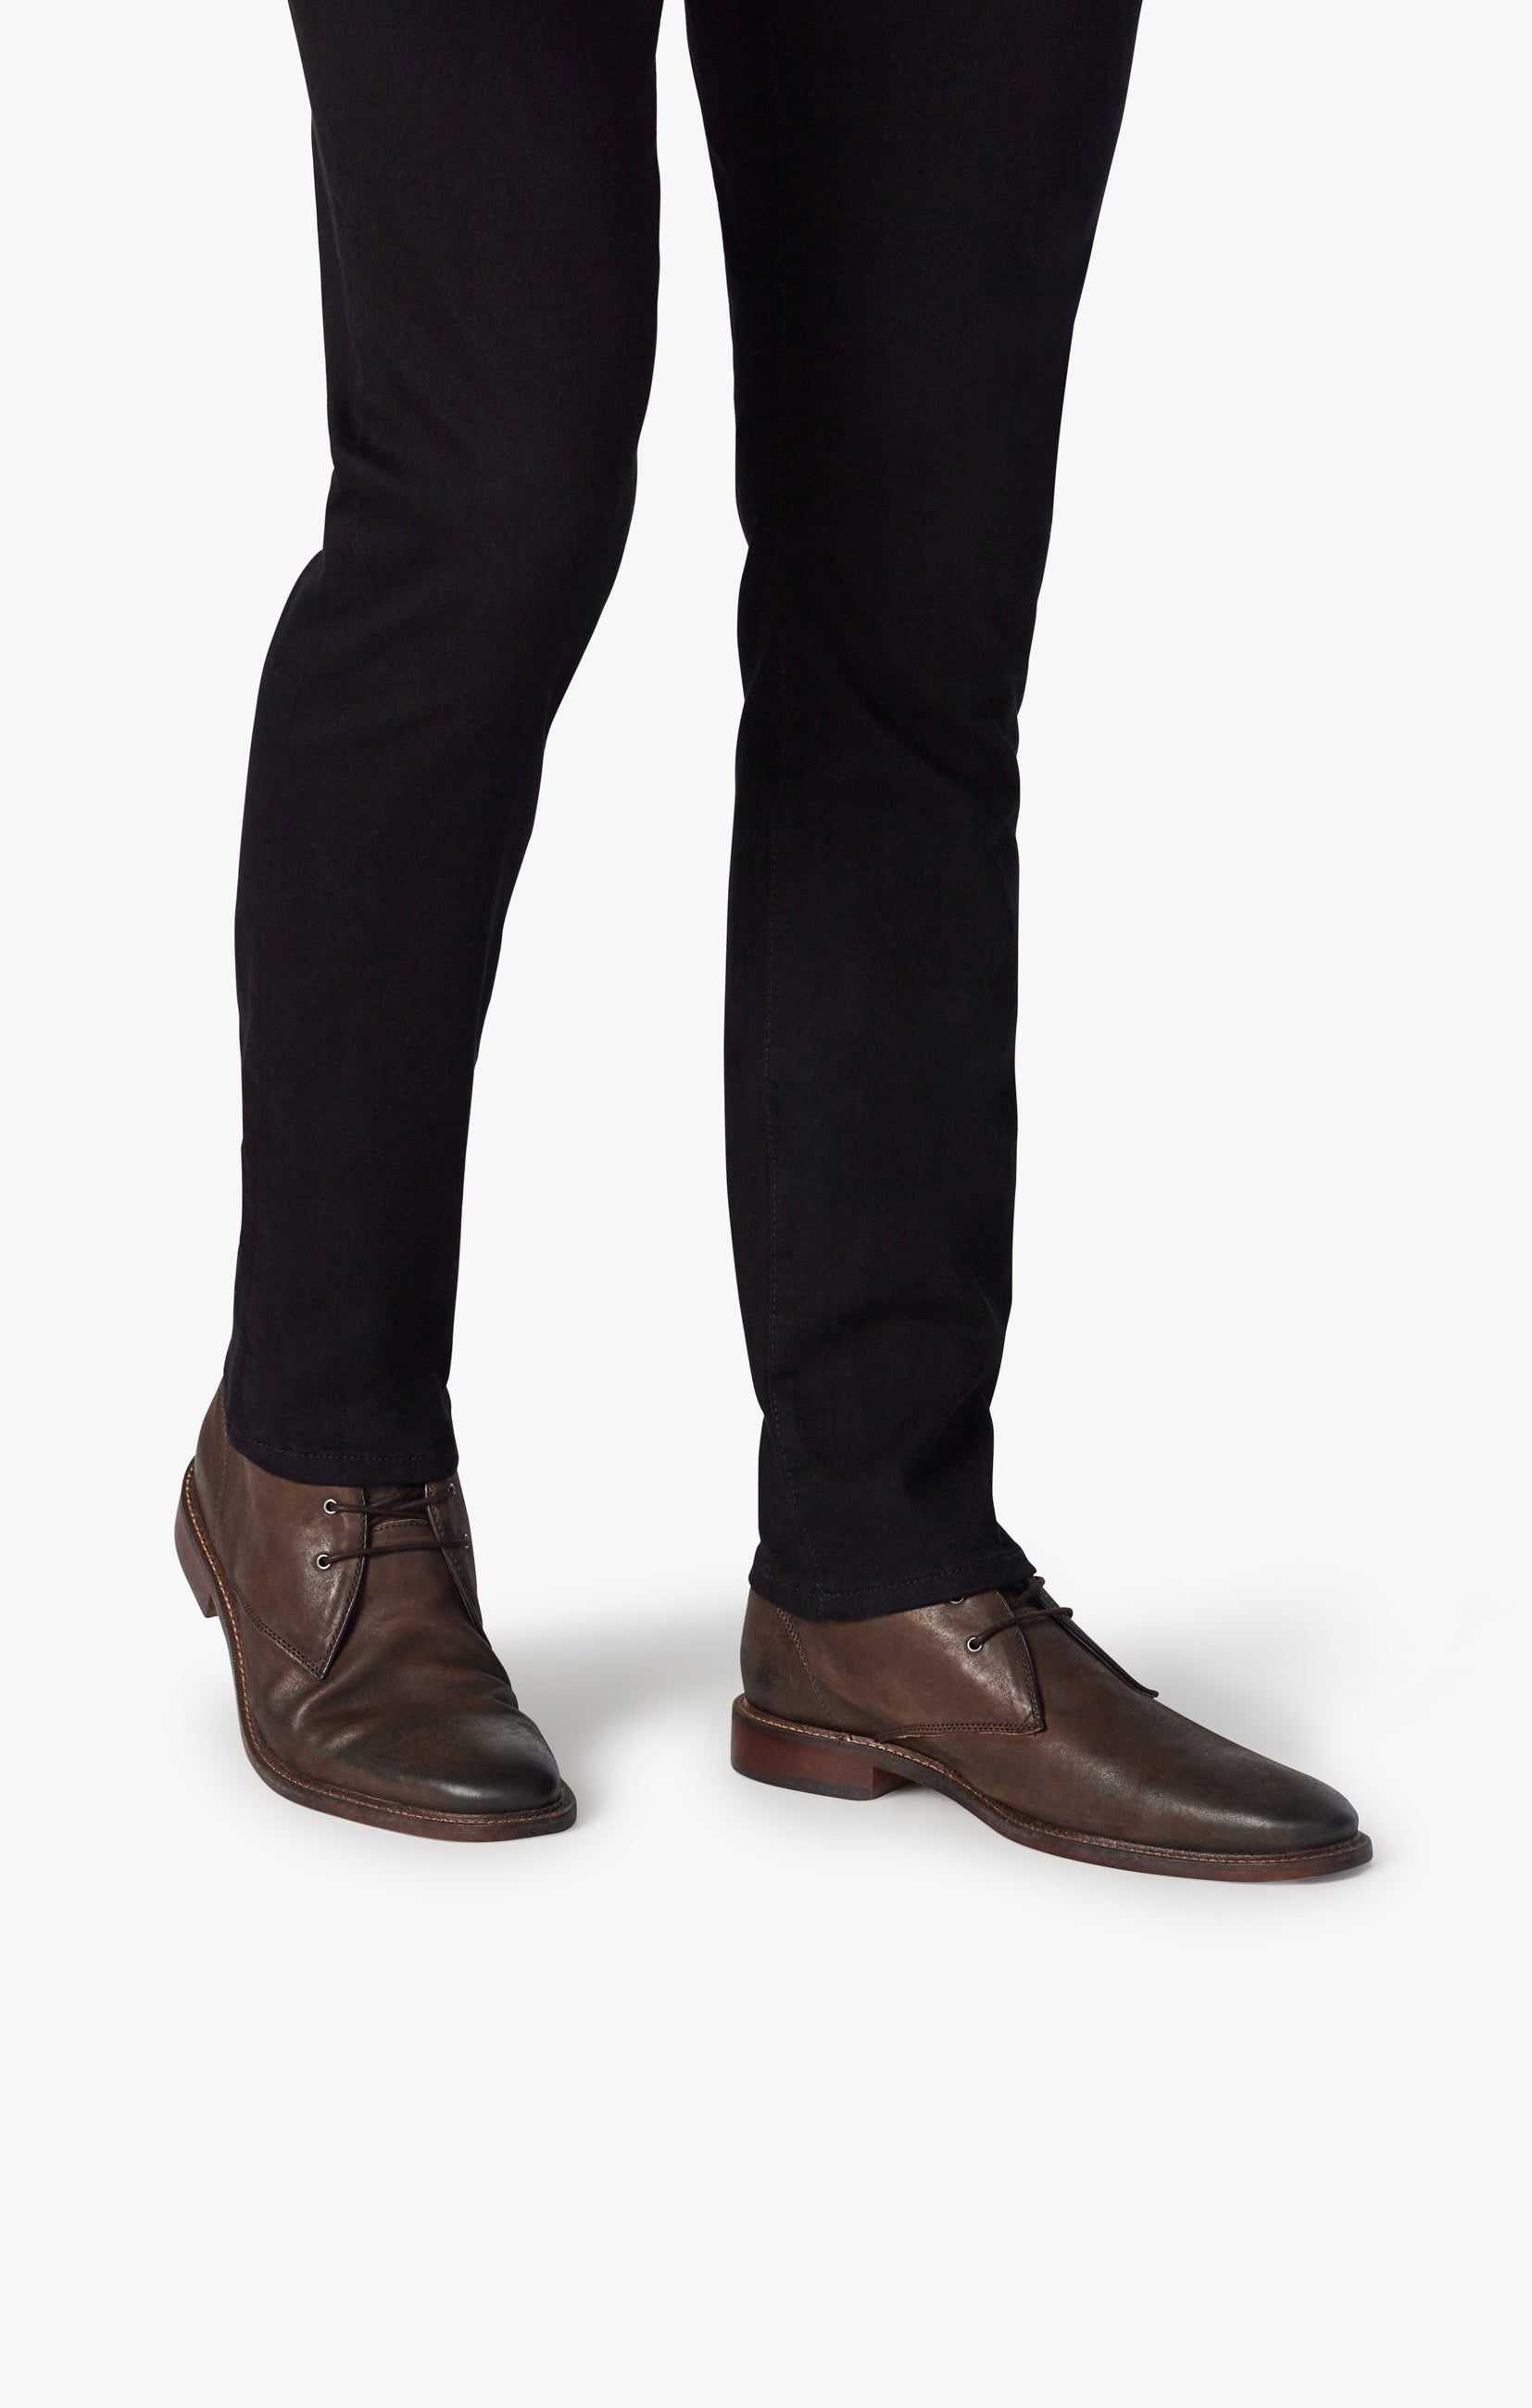 Cool Slim Leg Jeans in Black Vintage Comfort Image 7